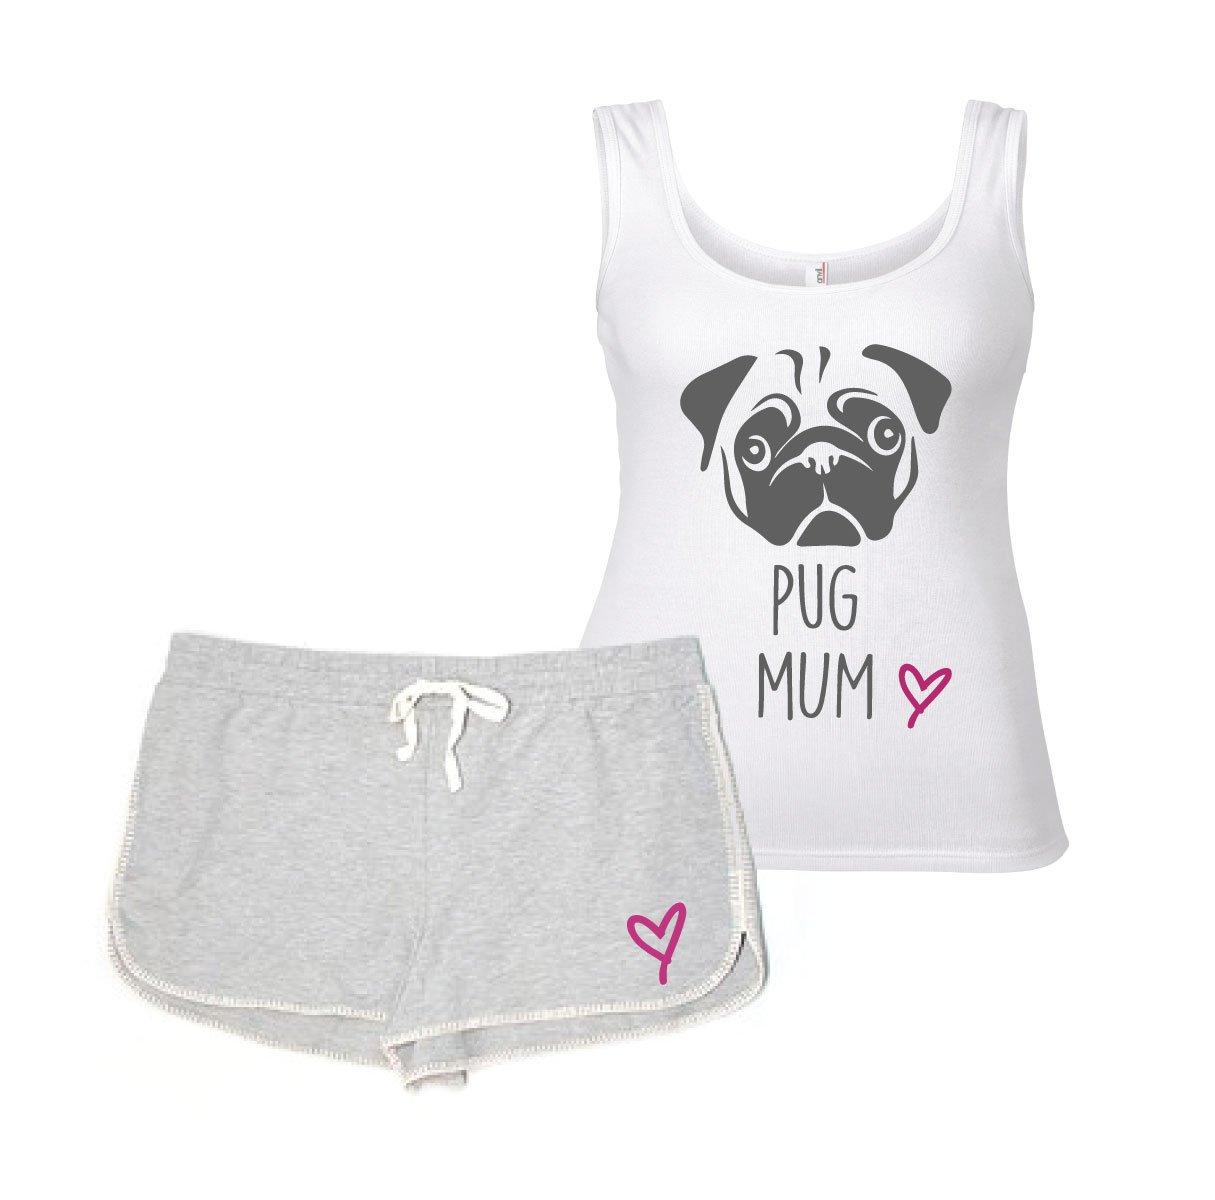 Pug Mum PJ's Pug Lounge Wear Grey and White